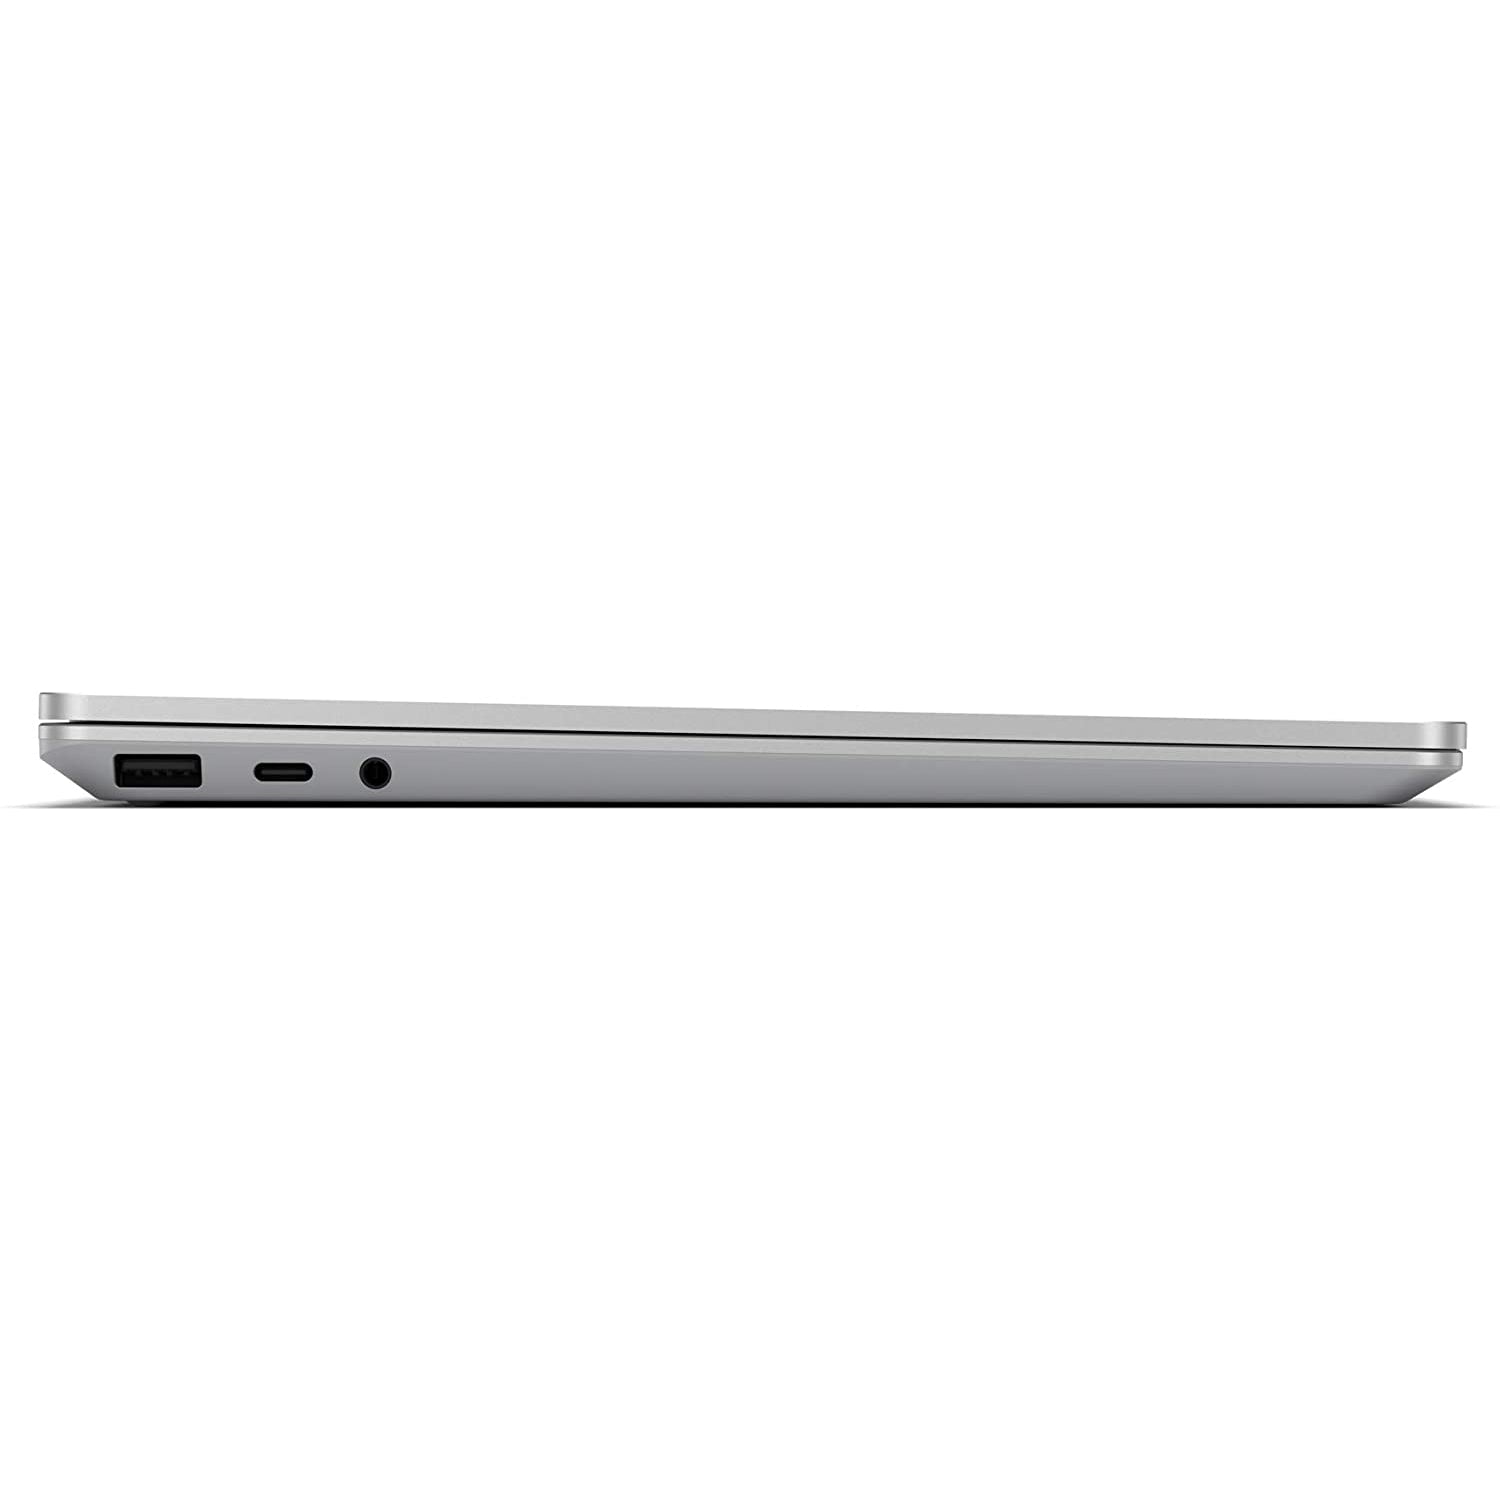 Microsoft Surface Laptop GO i5 8gb 128gb